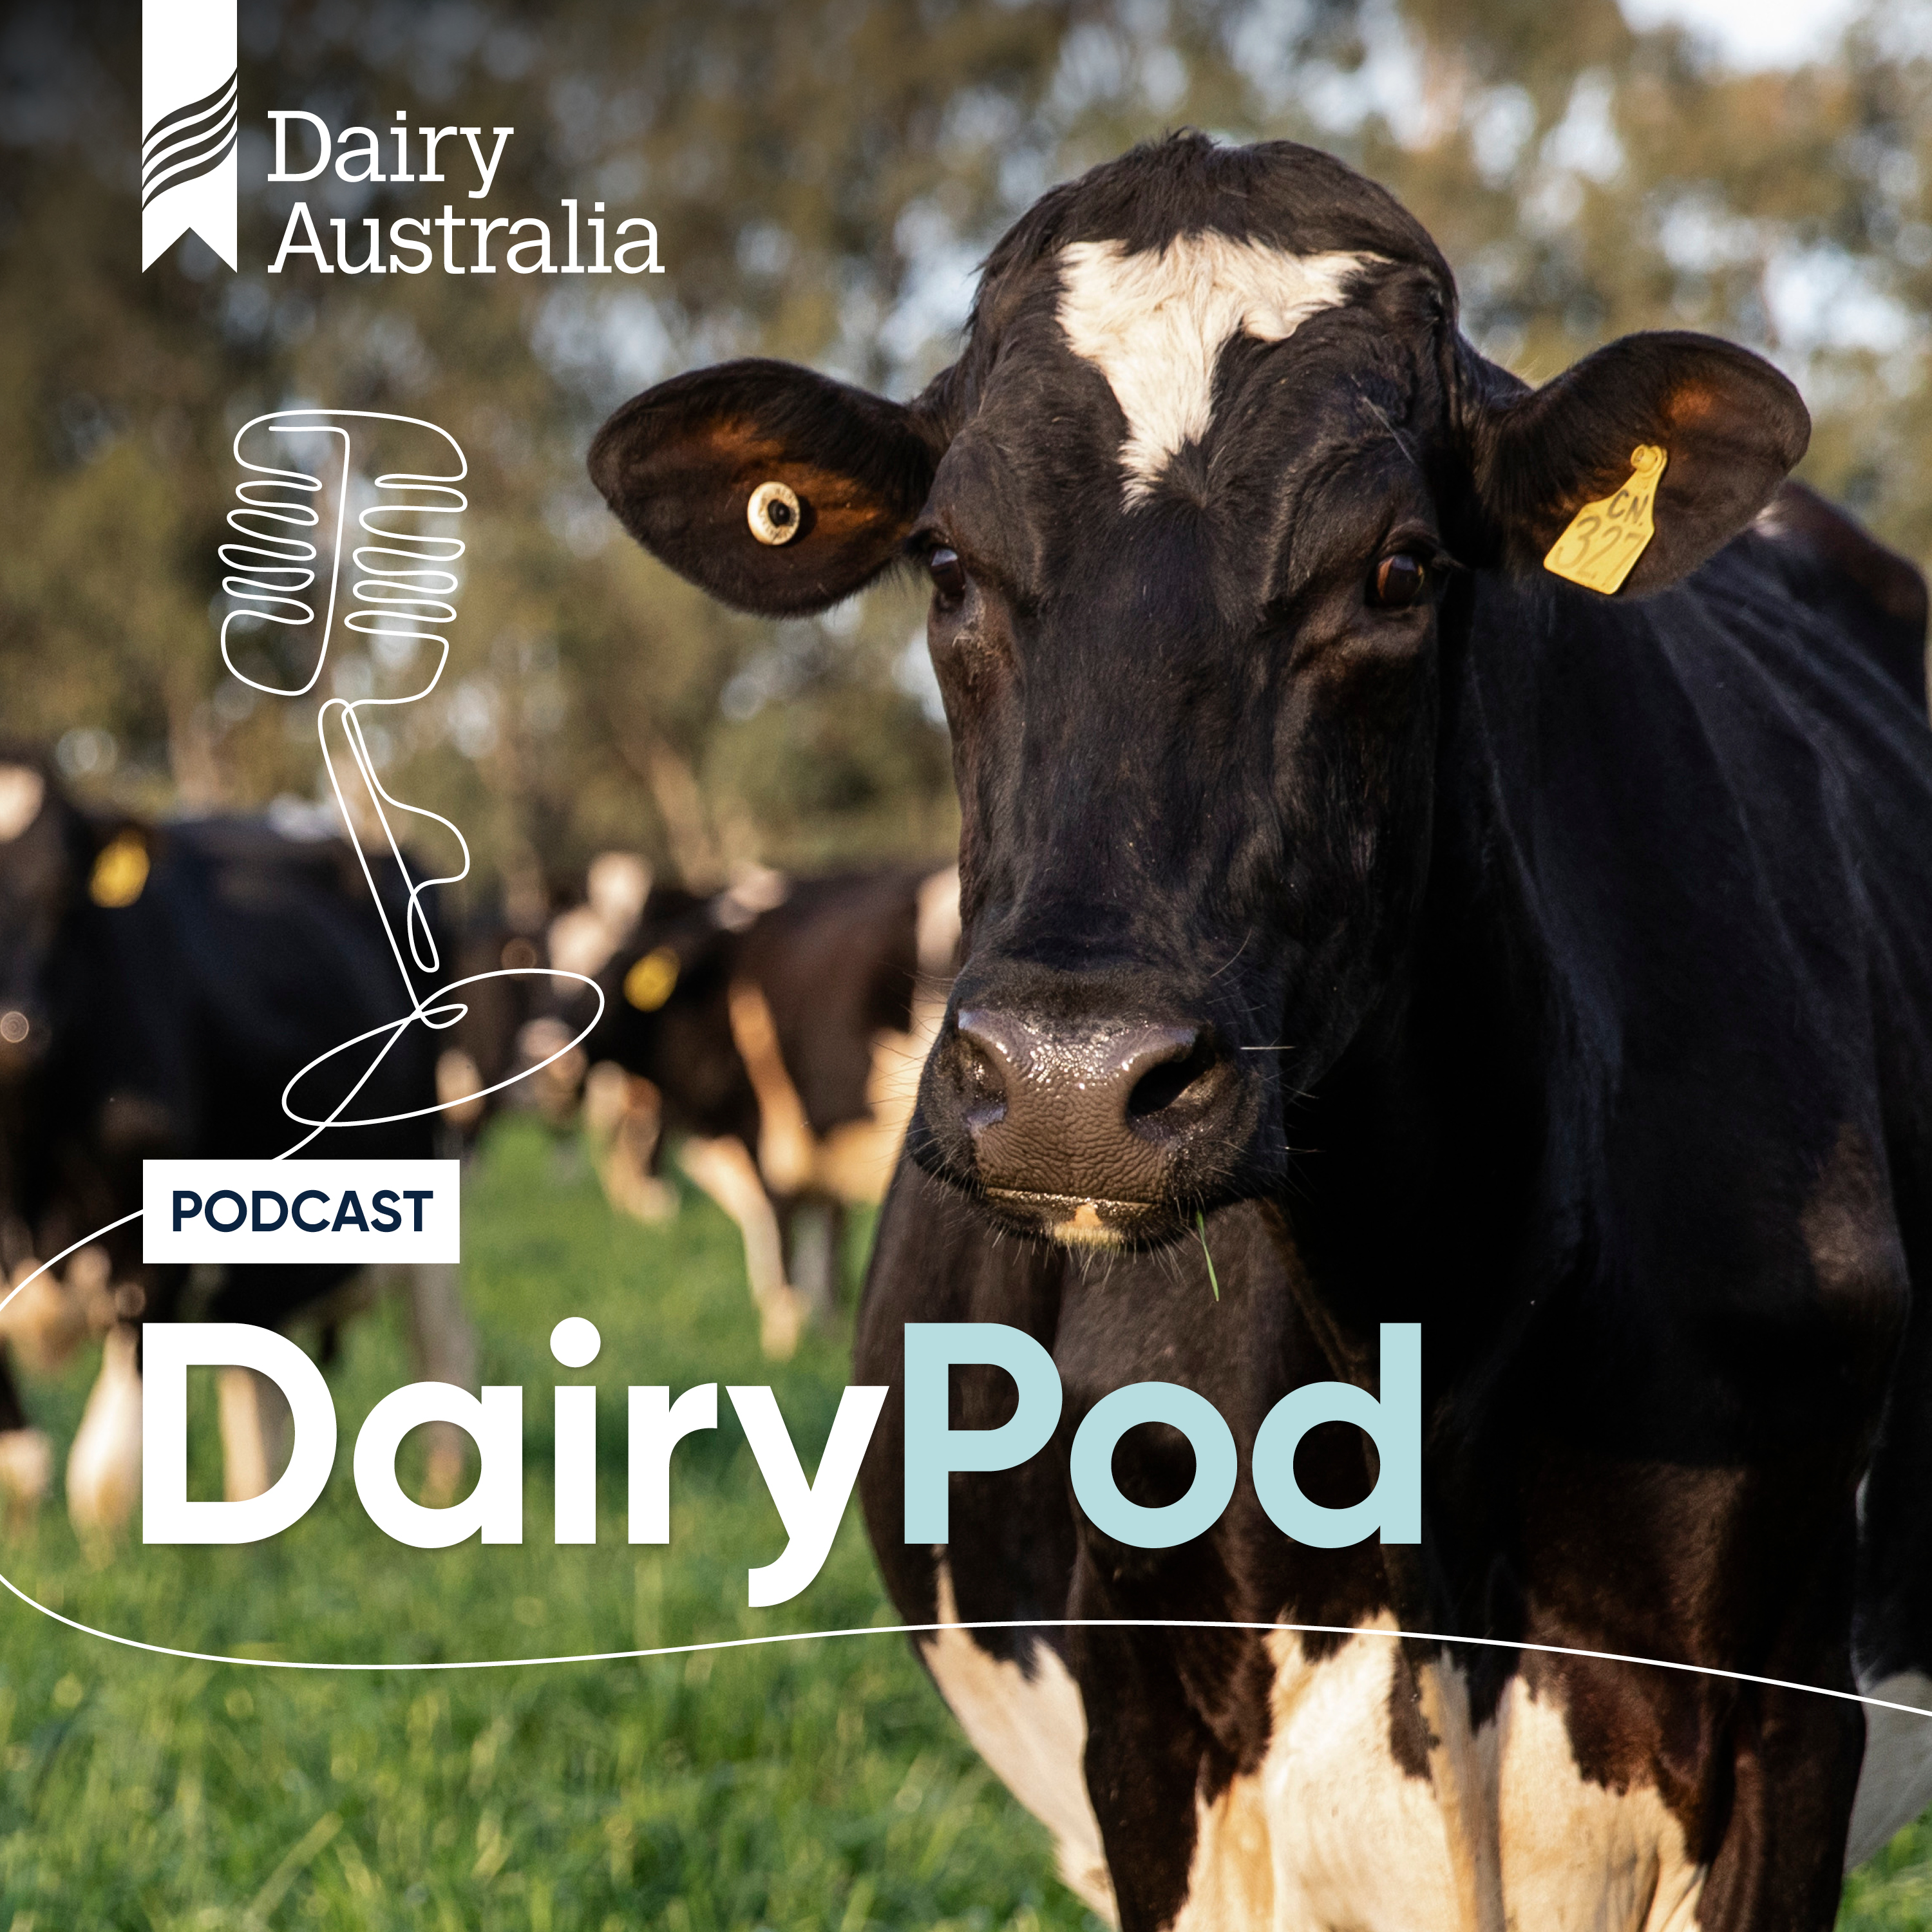 Australian dairy industry in focus